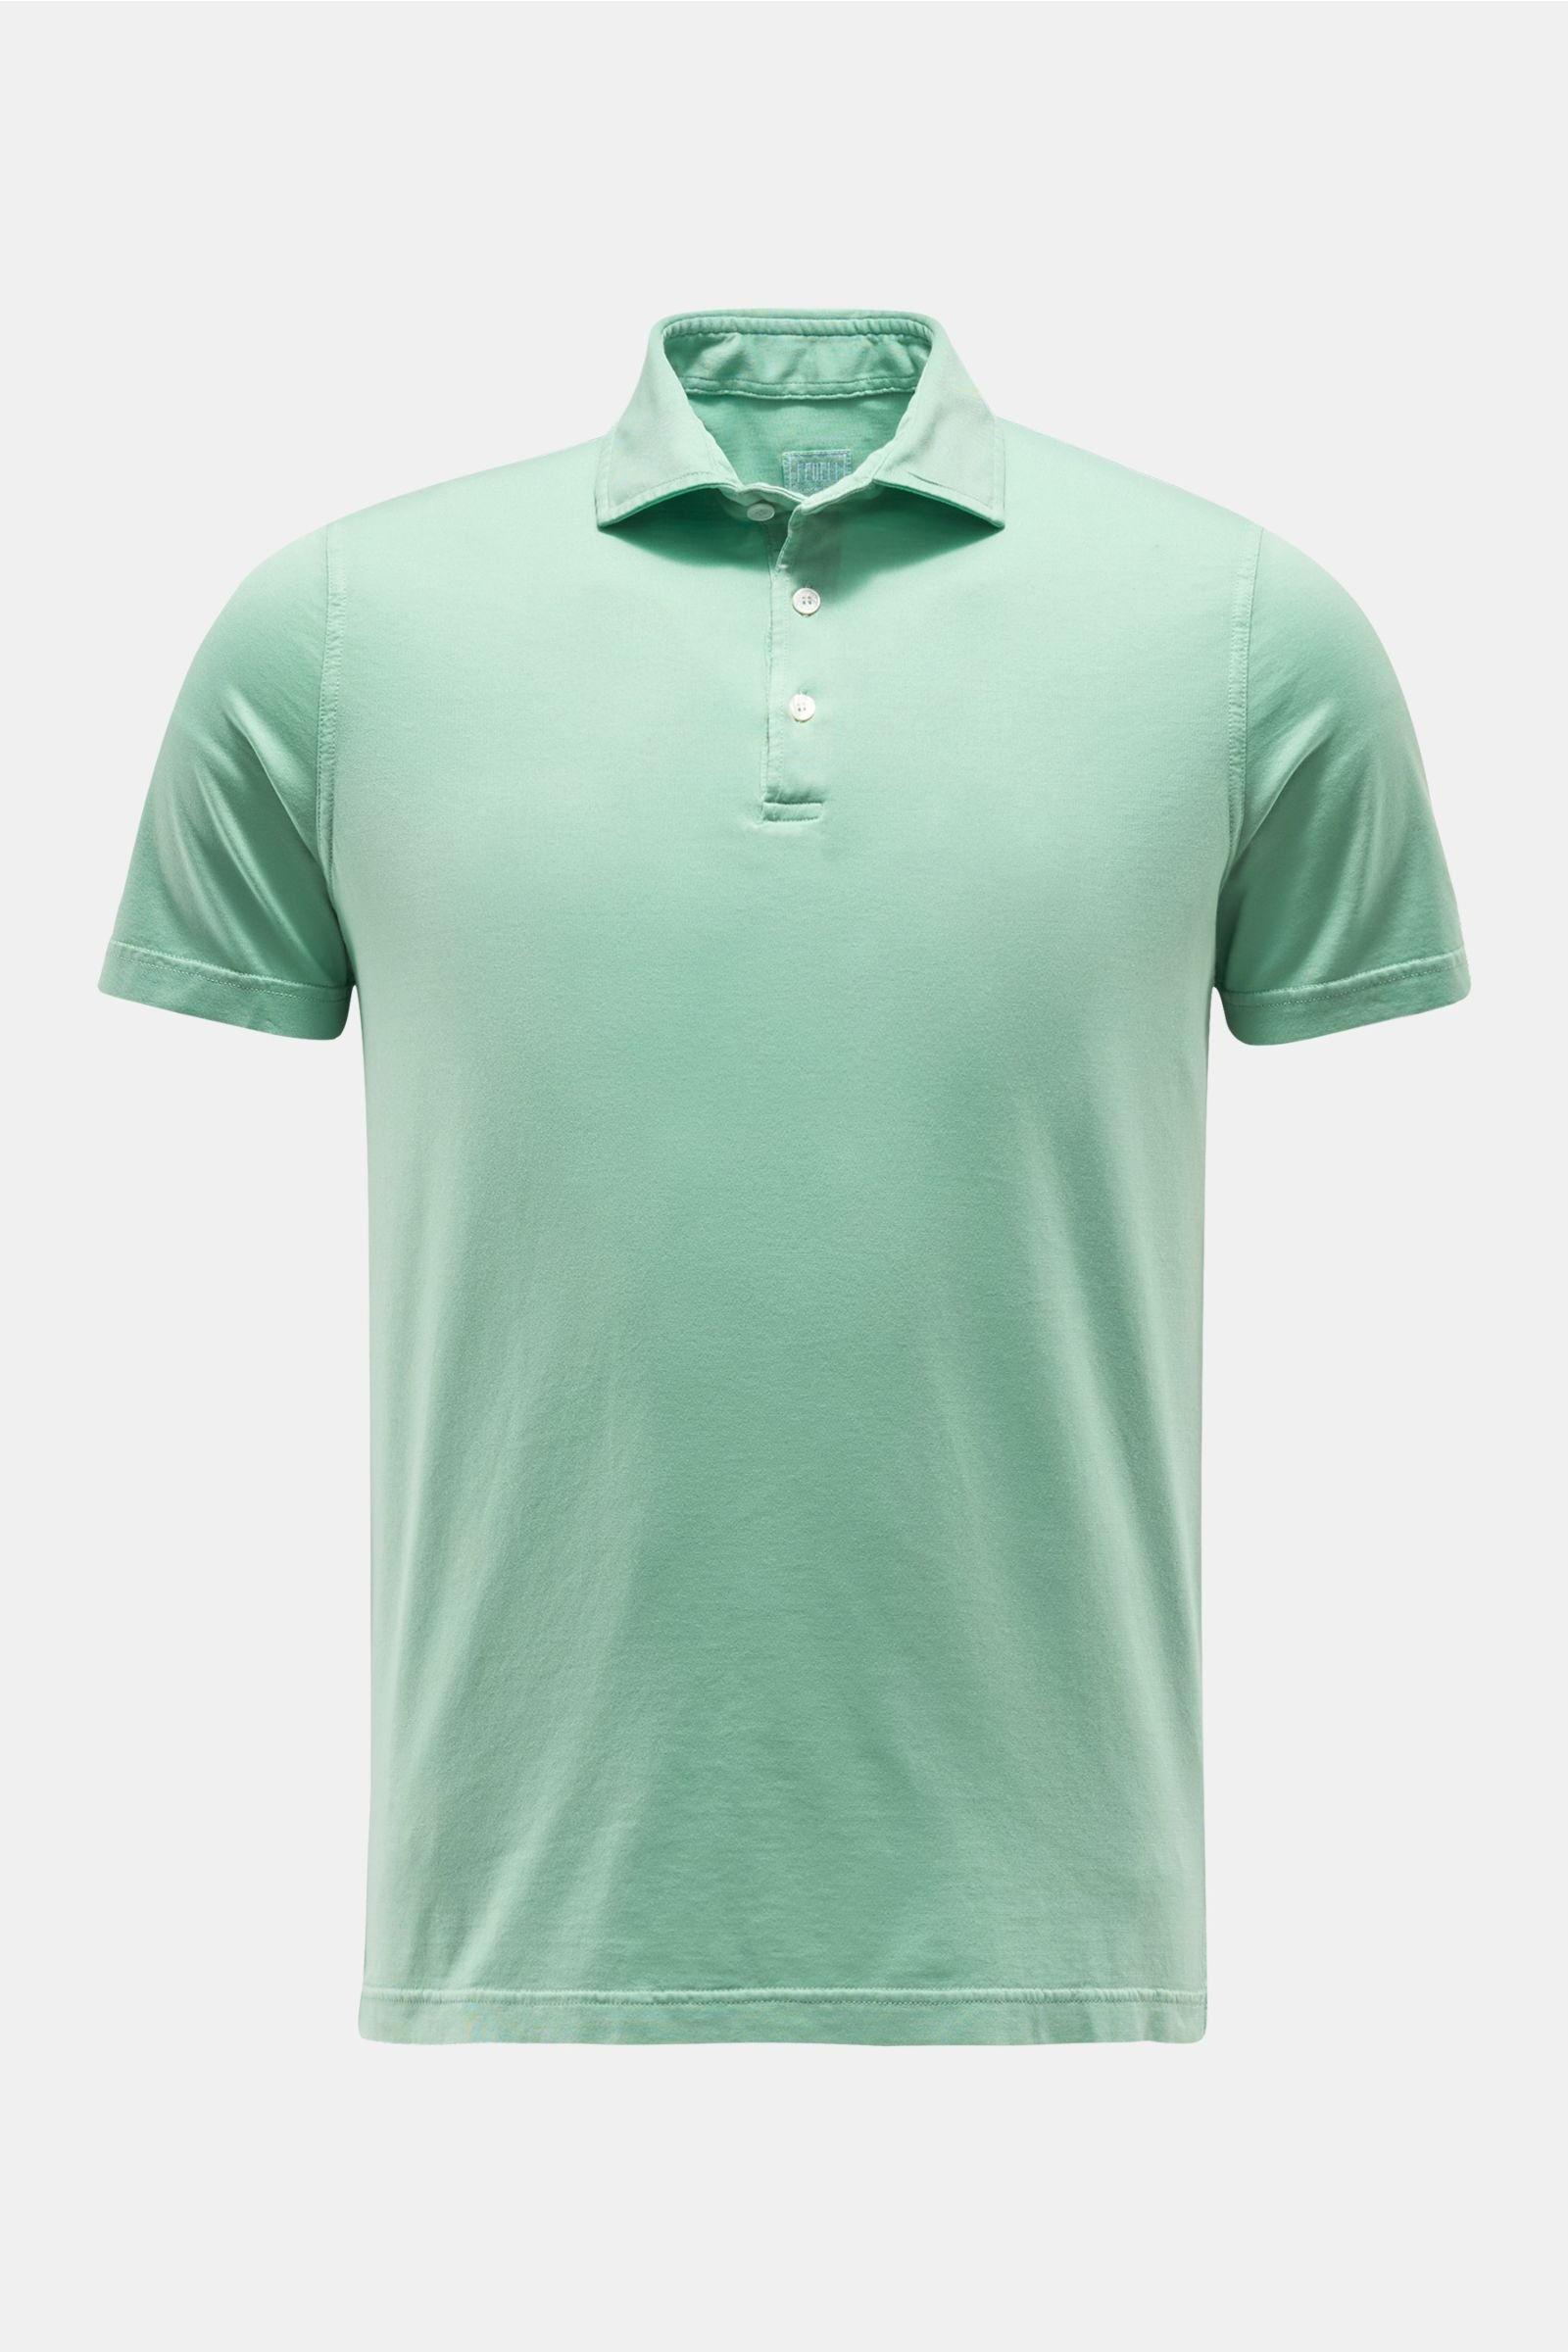 Jersey polo shirt 'Zero' mint green